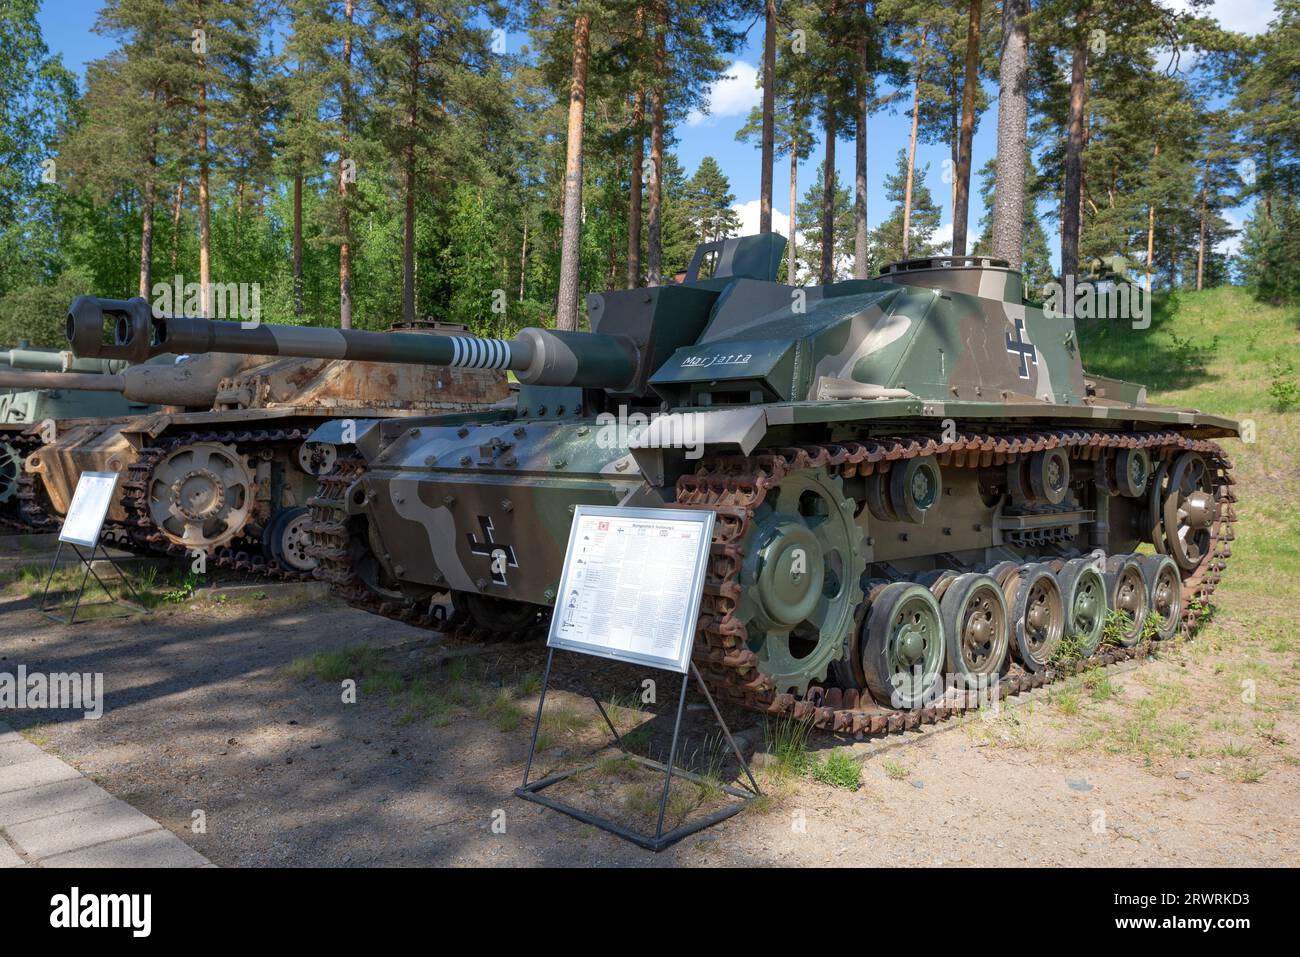 PAROLA, FINLAND - JUNE 10, 2017: German self-propelled assault gun Sd.Kfz. 142 (StuG III Ausf.G) model 1943. Outdoor exhibition of the armored vehicle Stock Photo